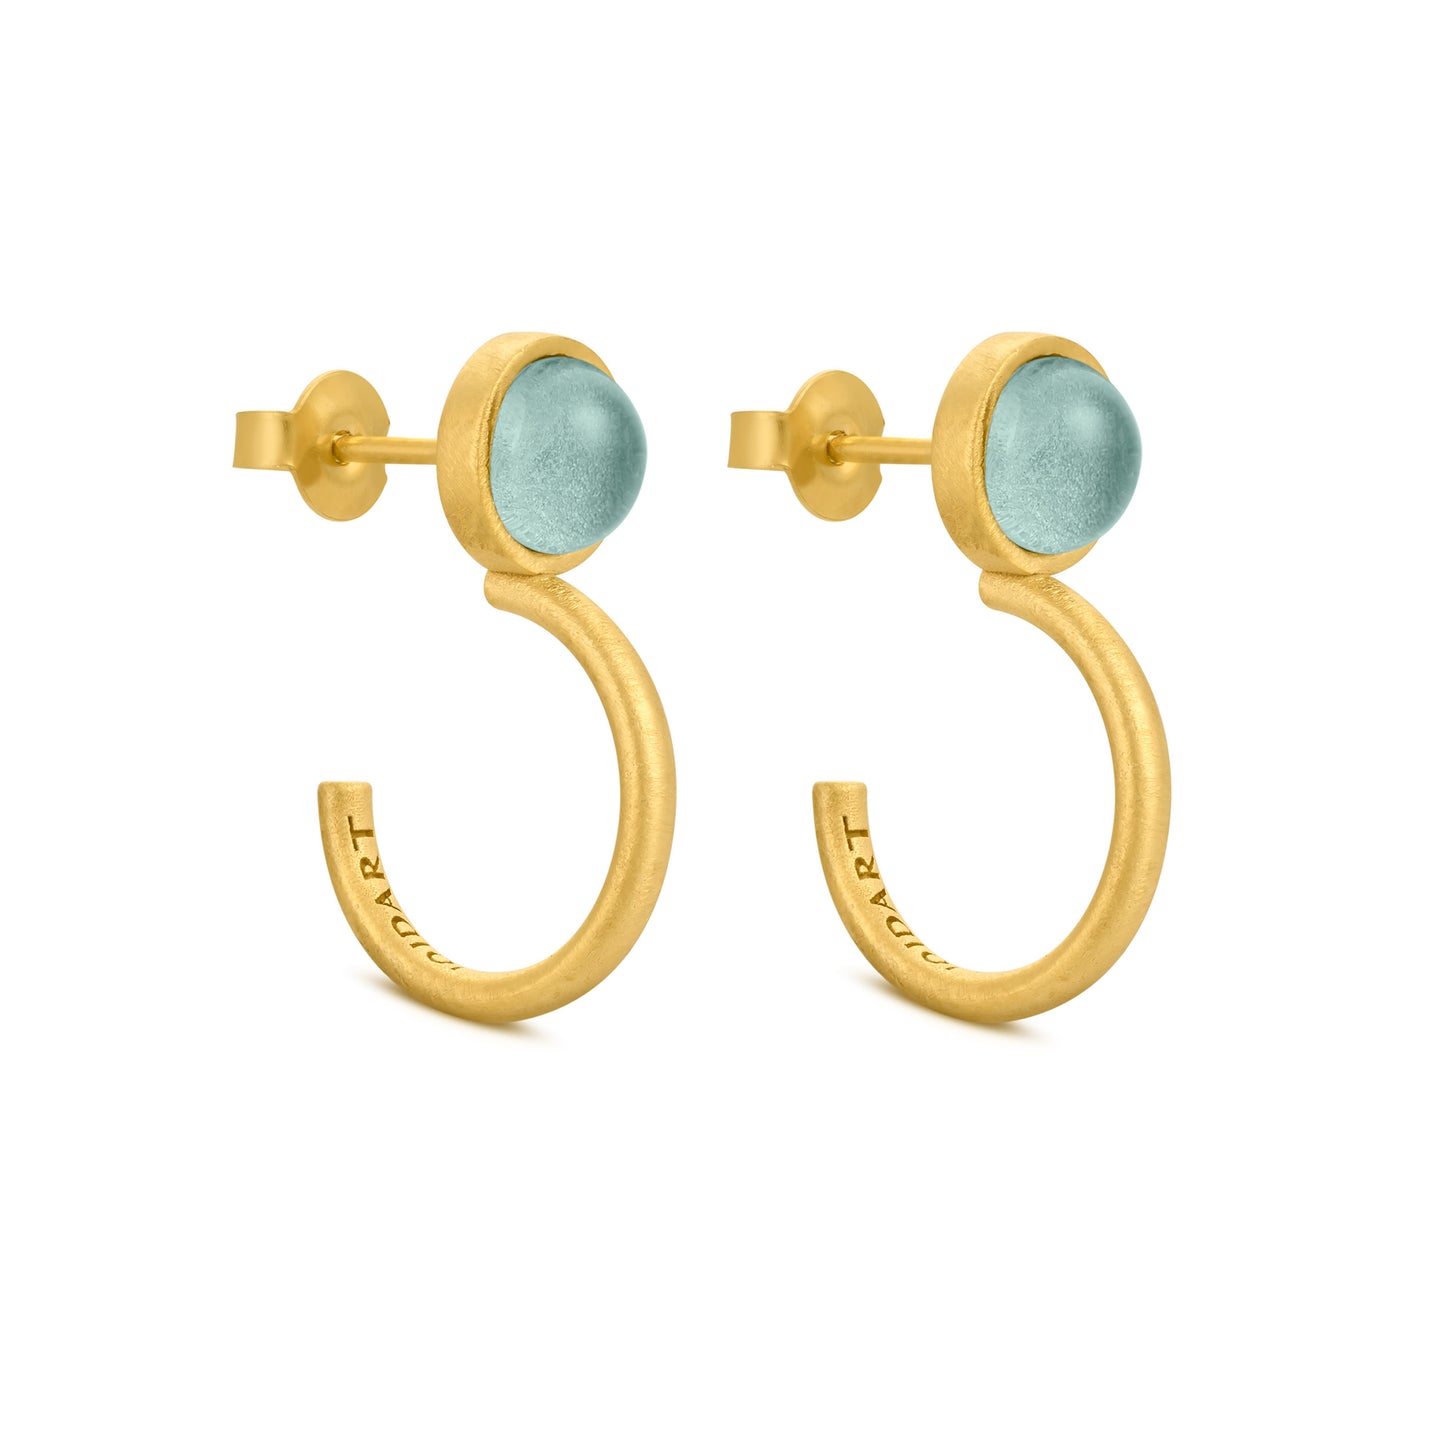 Golden earrings Alegria by Carme Fàbregas